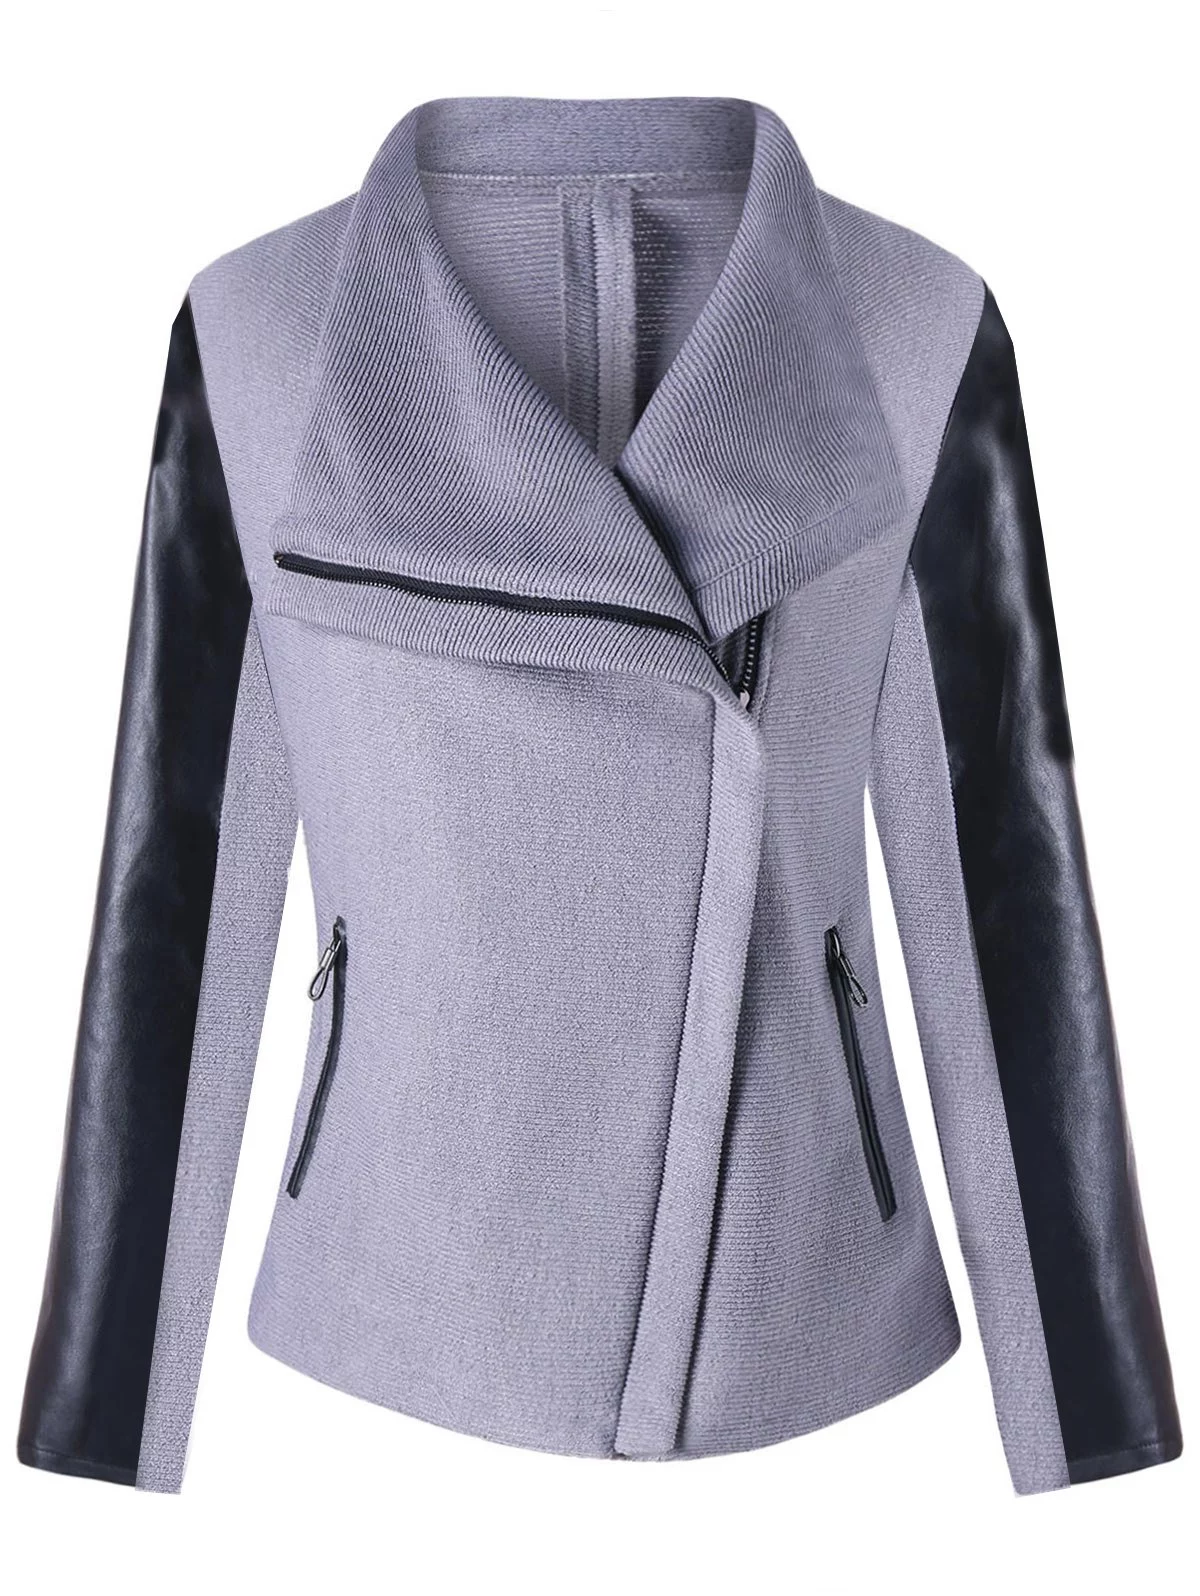 Zipped PU Leather Panel Turndown Collar Jacket Gray